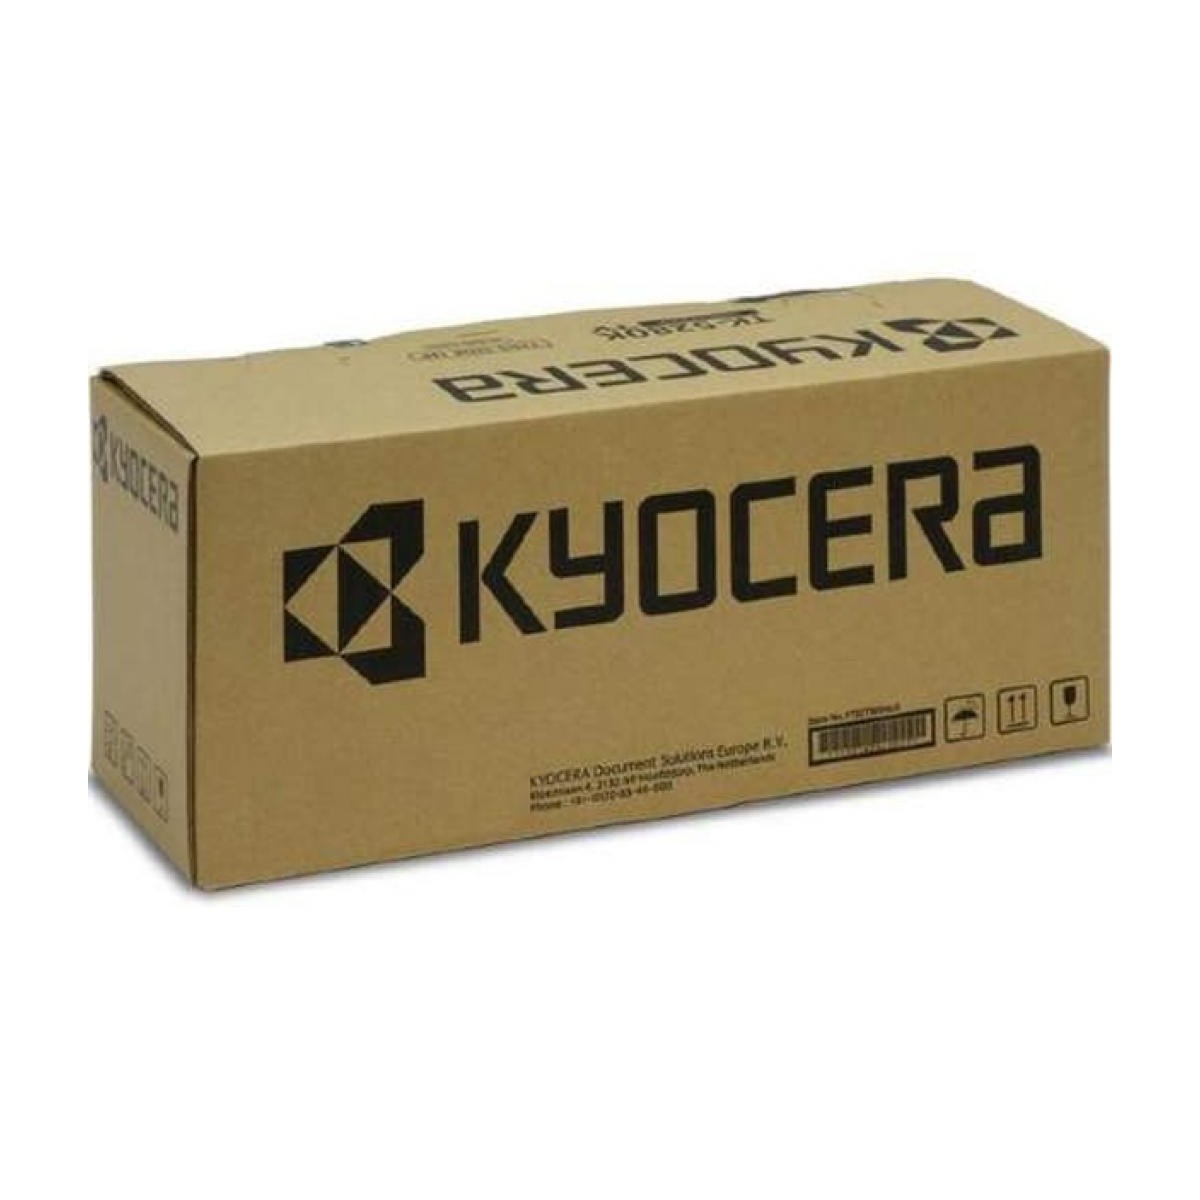 Kyocera DK-8350 - Original - Kyocera - TASKalfa 2552ci - TASKalfa 3252ci - 1 pc(s) - 200000 pages - Laser printing